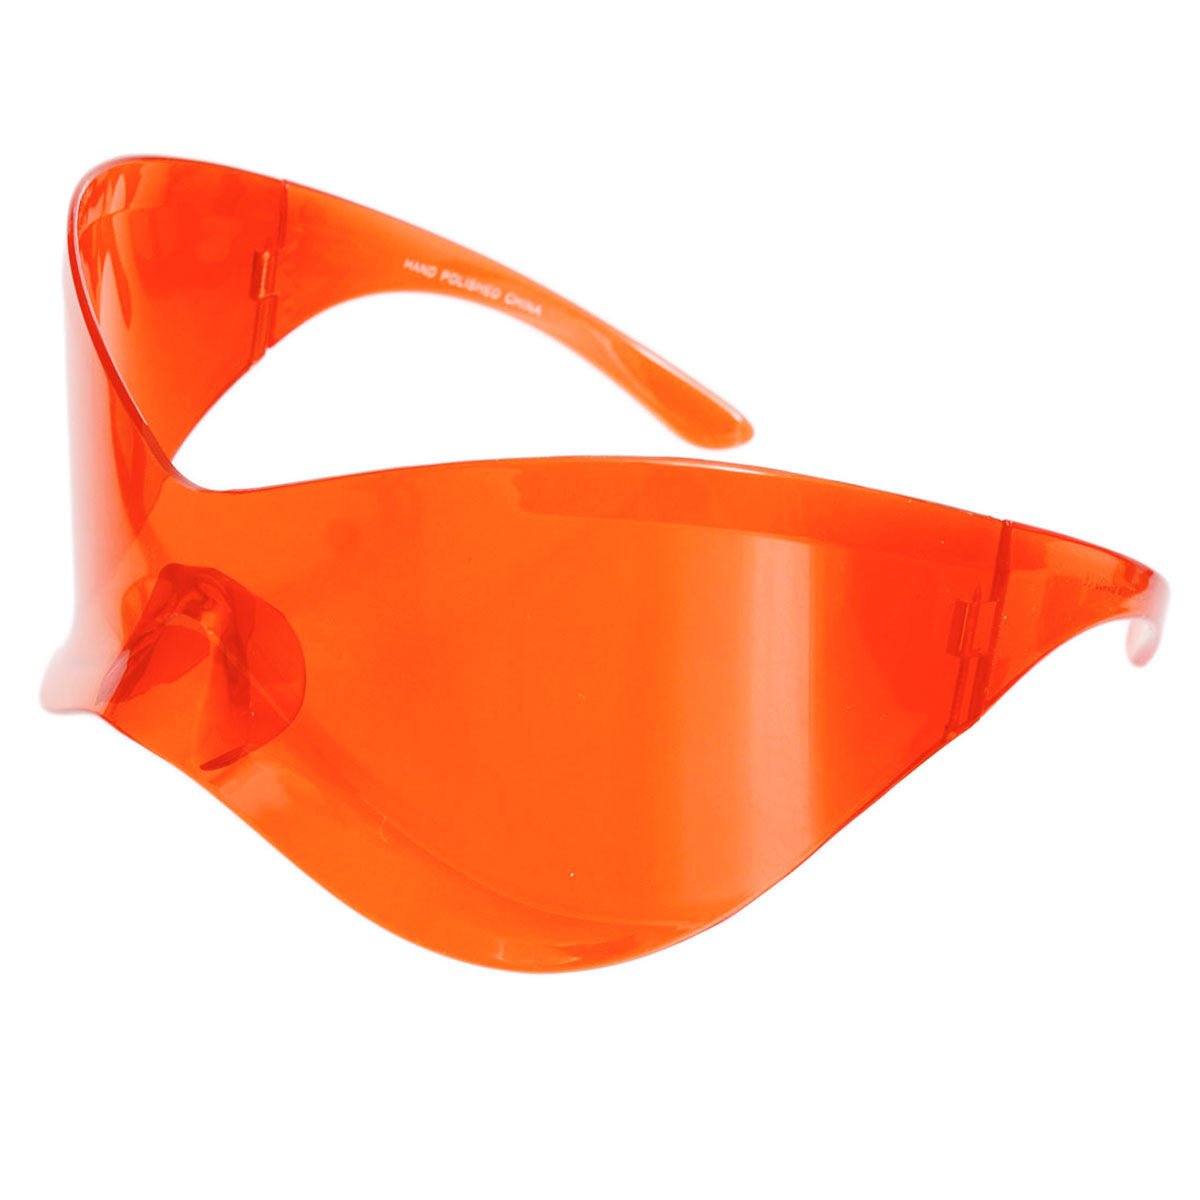 Sunglasses Mask Wrap Red Eyewear for Women - Bae Apparel